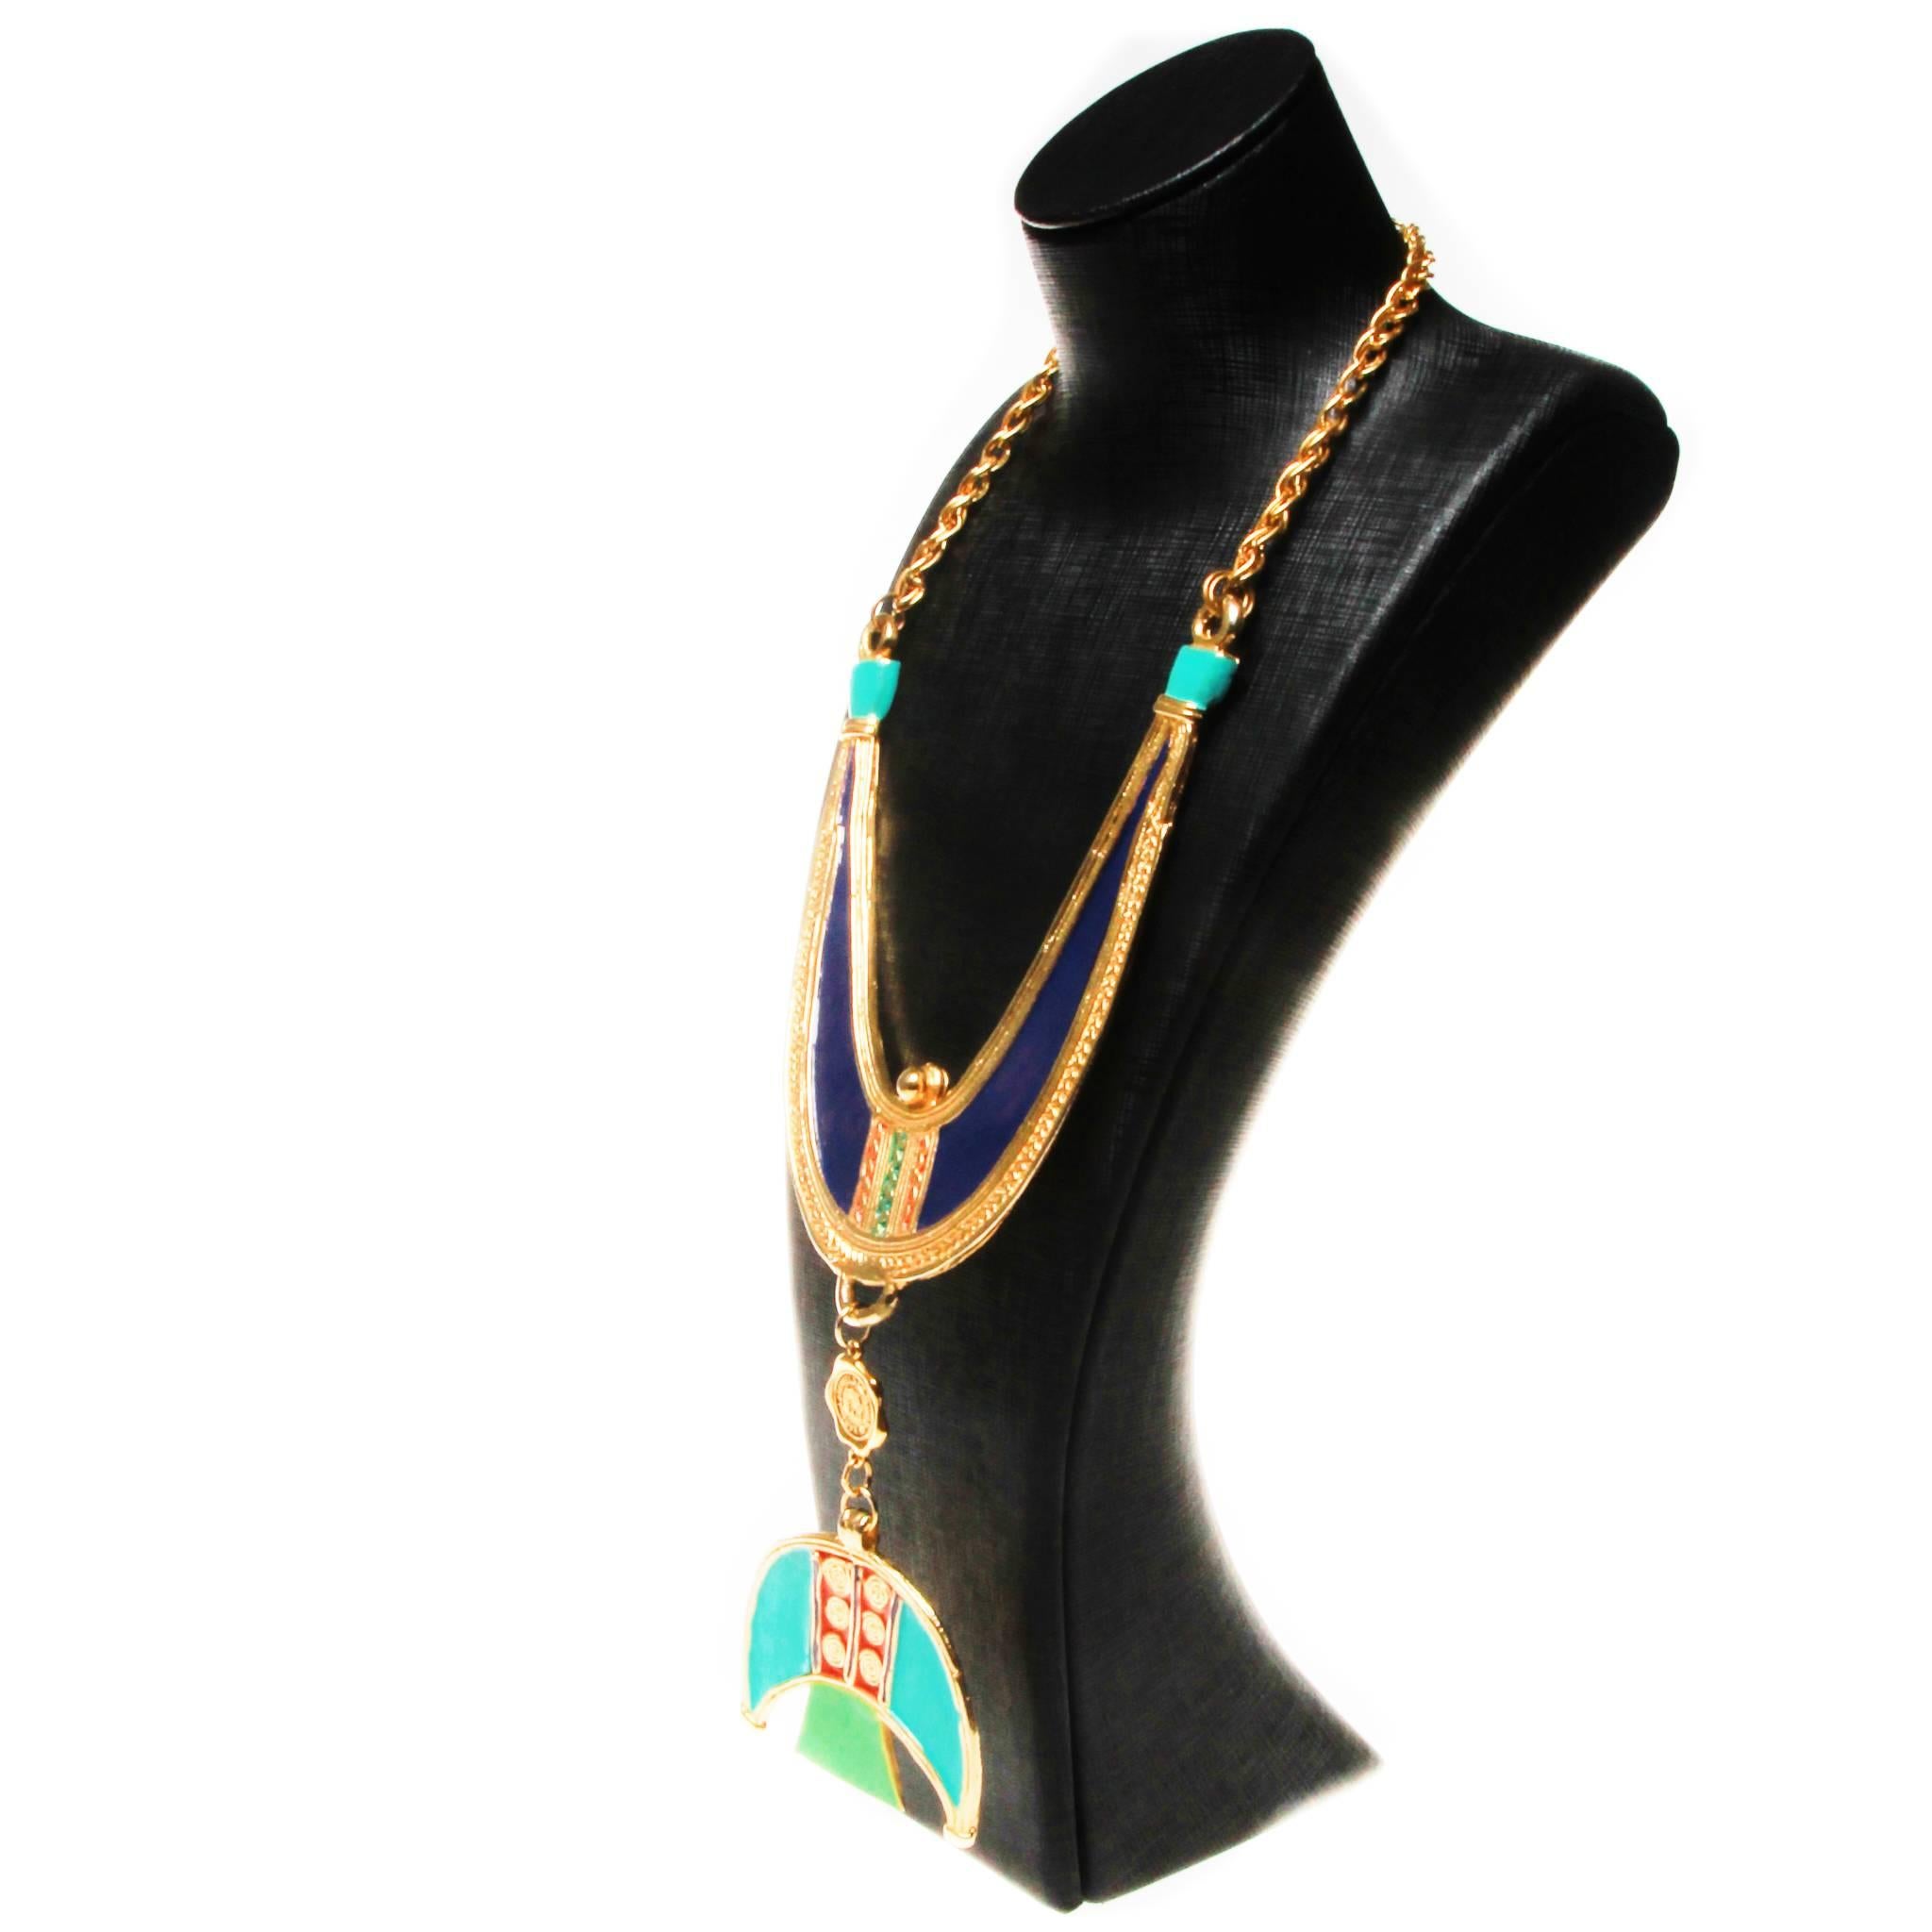 Karl Lagerfeld Paris Oversized Enamelled Runway Necklace 212.8 grams For Sale 1